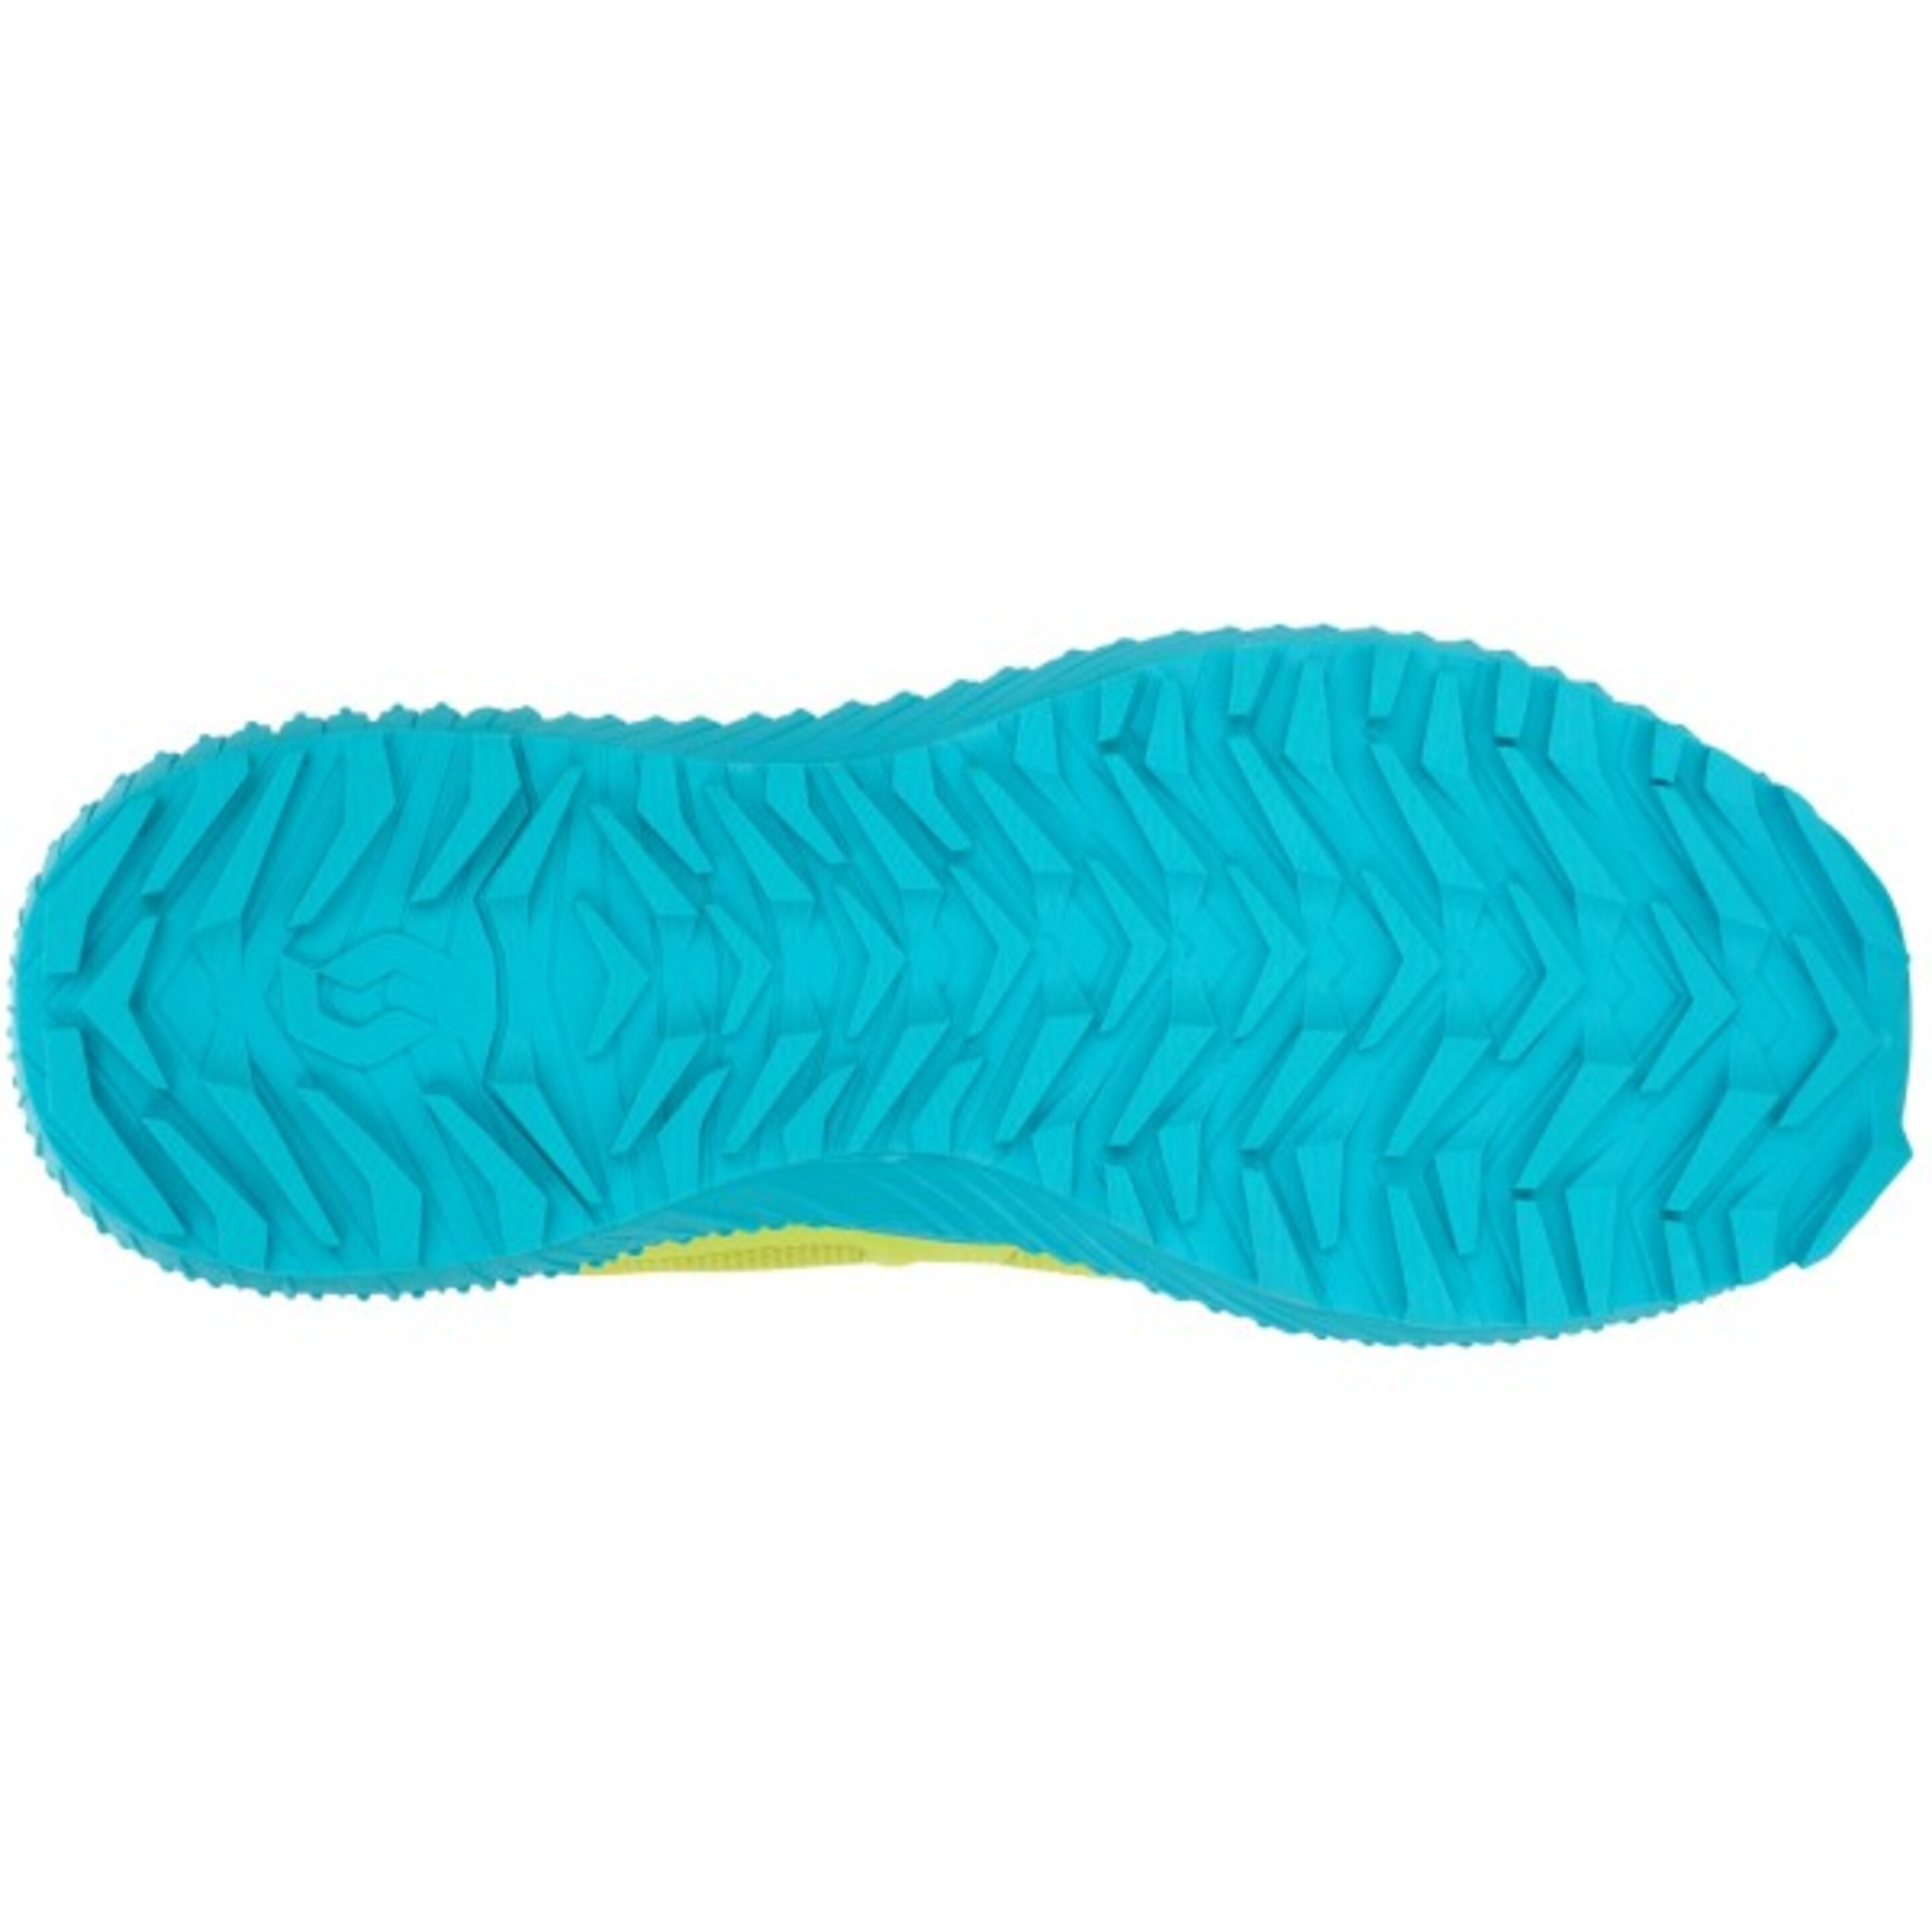 Zapatilla Mujer Scott Kinabalu Amarillo/azul